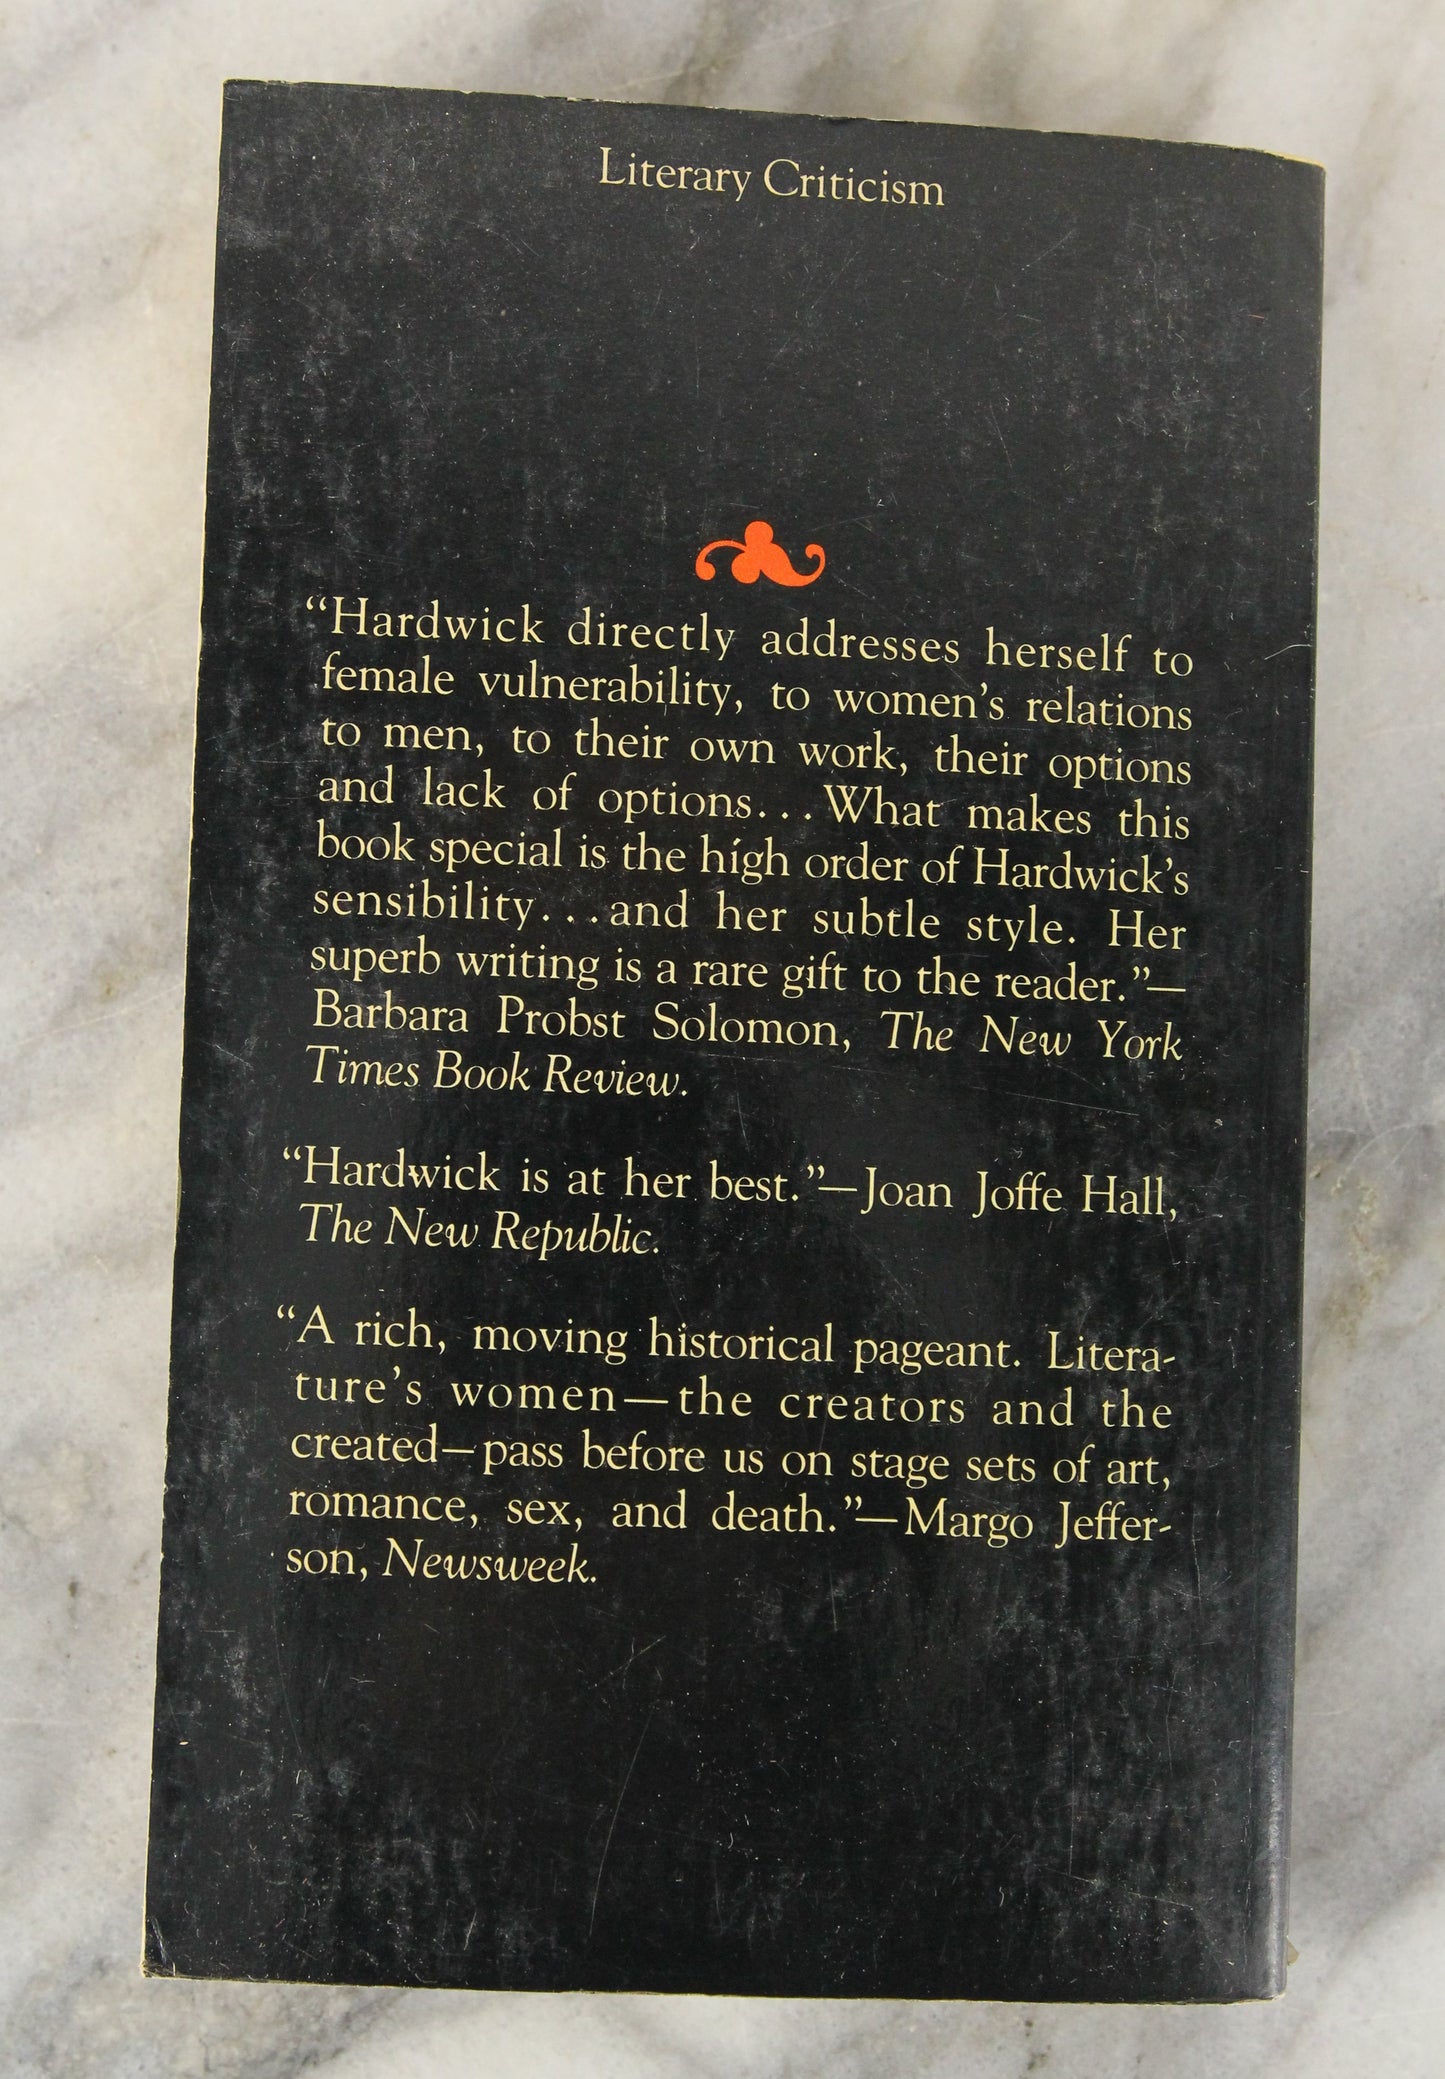 Seduction & Betrayal: Women and Literature by Elizabeth Hardwick, Copyright 1974